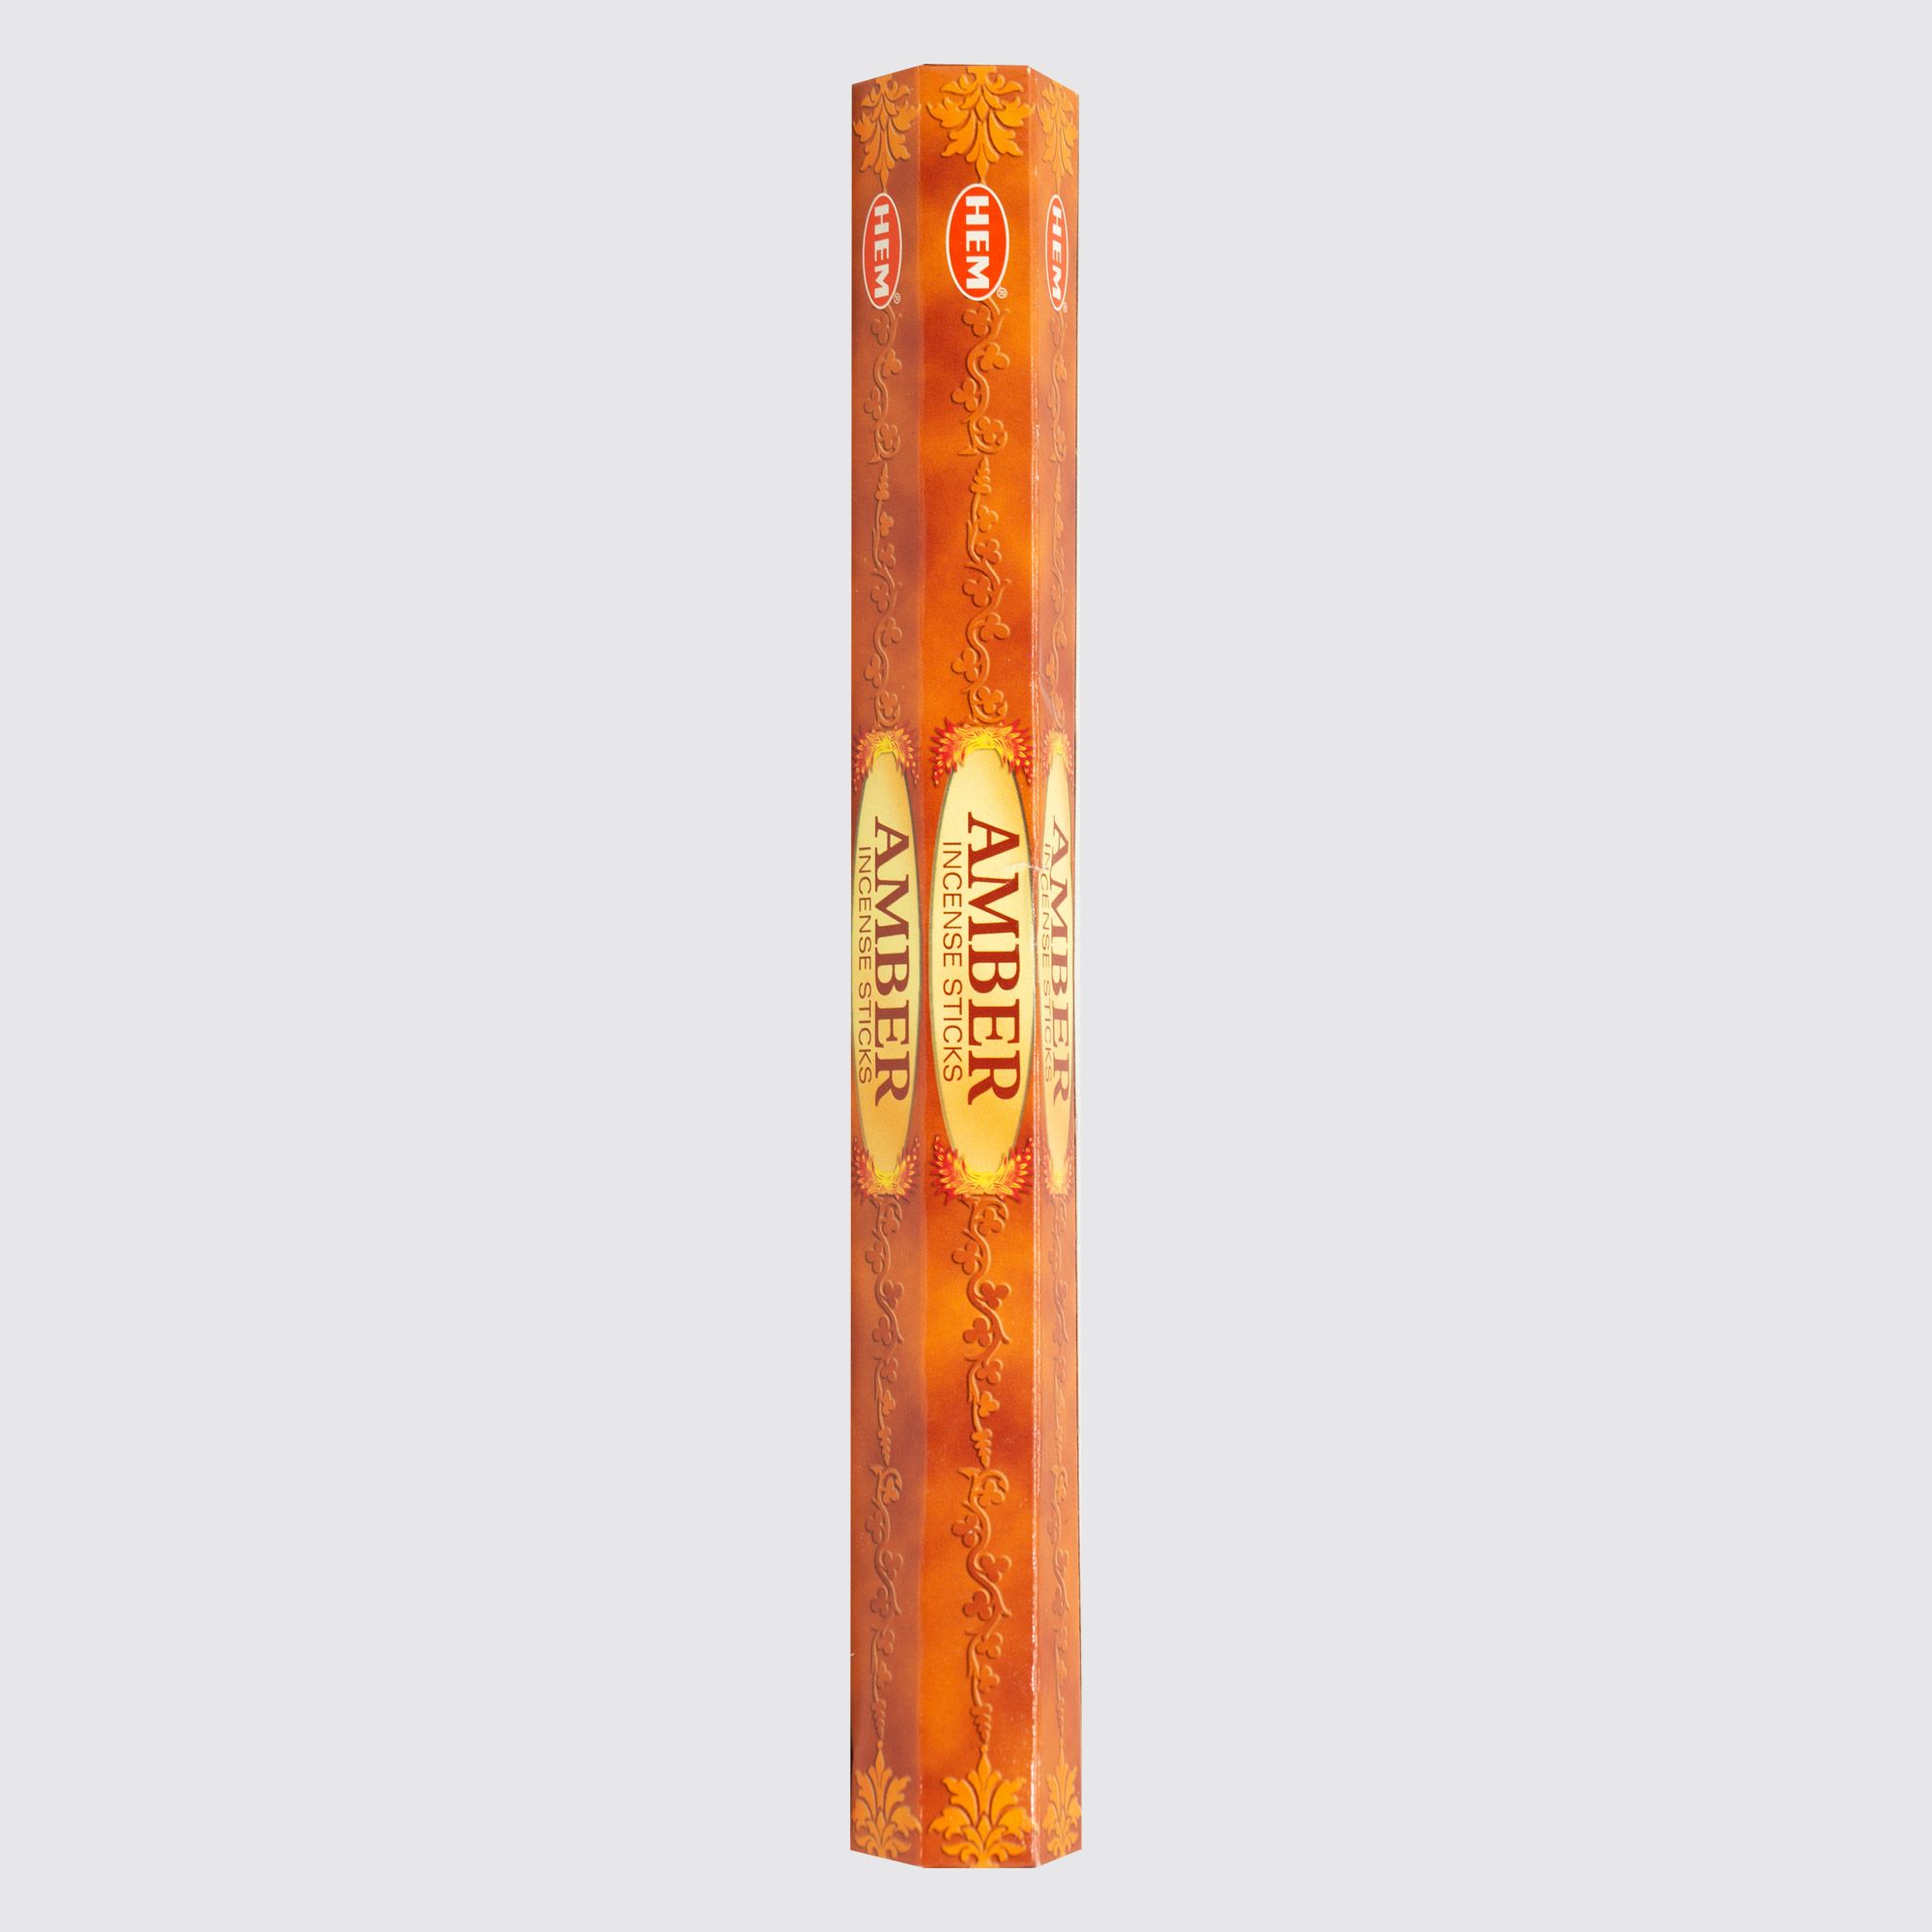 HEM® Amber Hexa Incense Sticks #54402